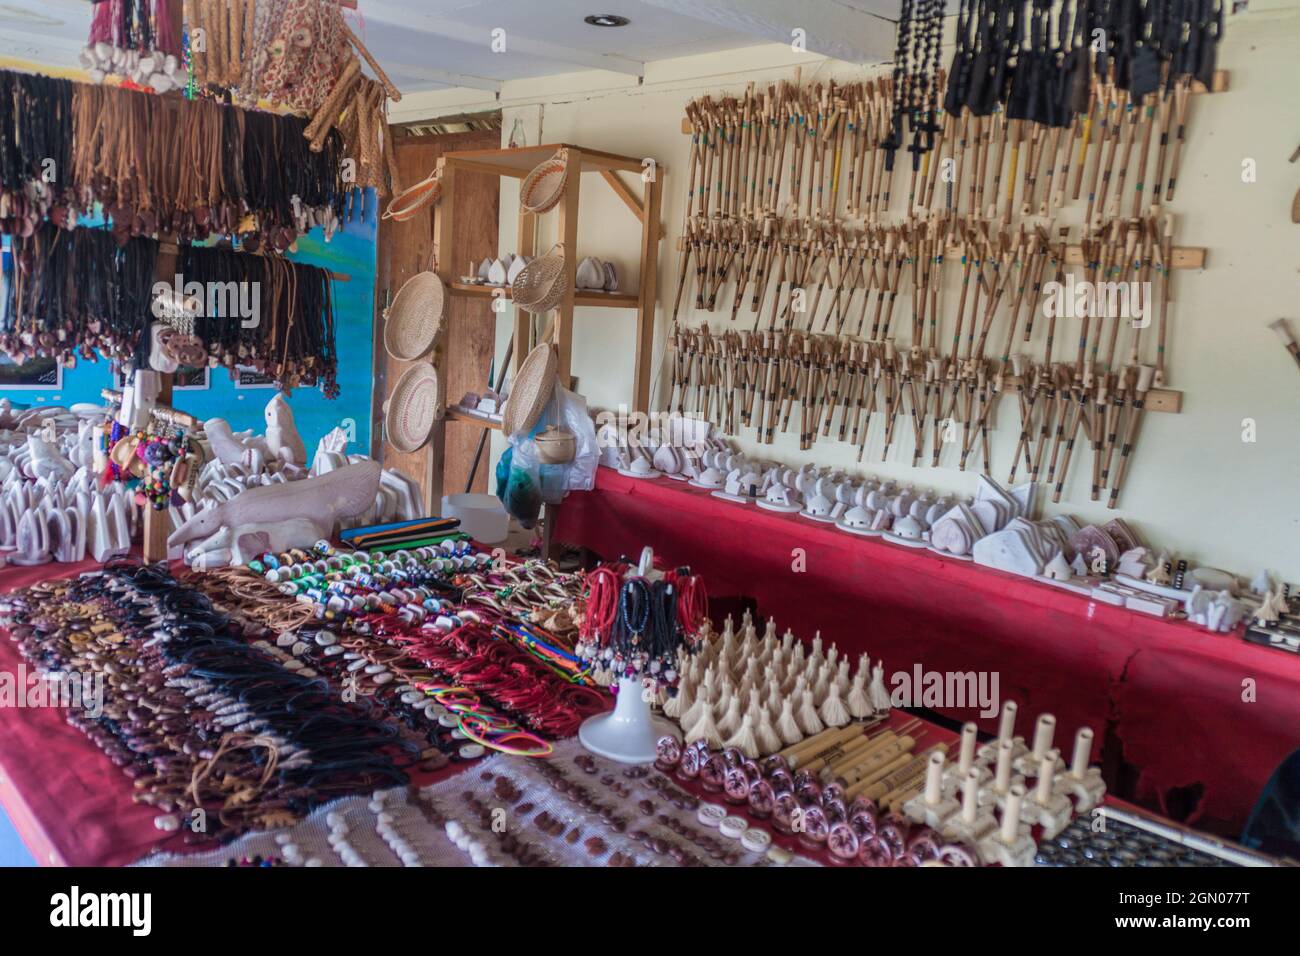 GRAN SABANA, VENEZUELA - AUGUST 13, 2015: Handmade souvenirs for sale in an indigenous village in Gran Sabana region of Venezuela Stock Photo